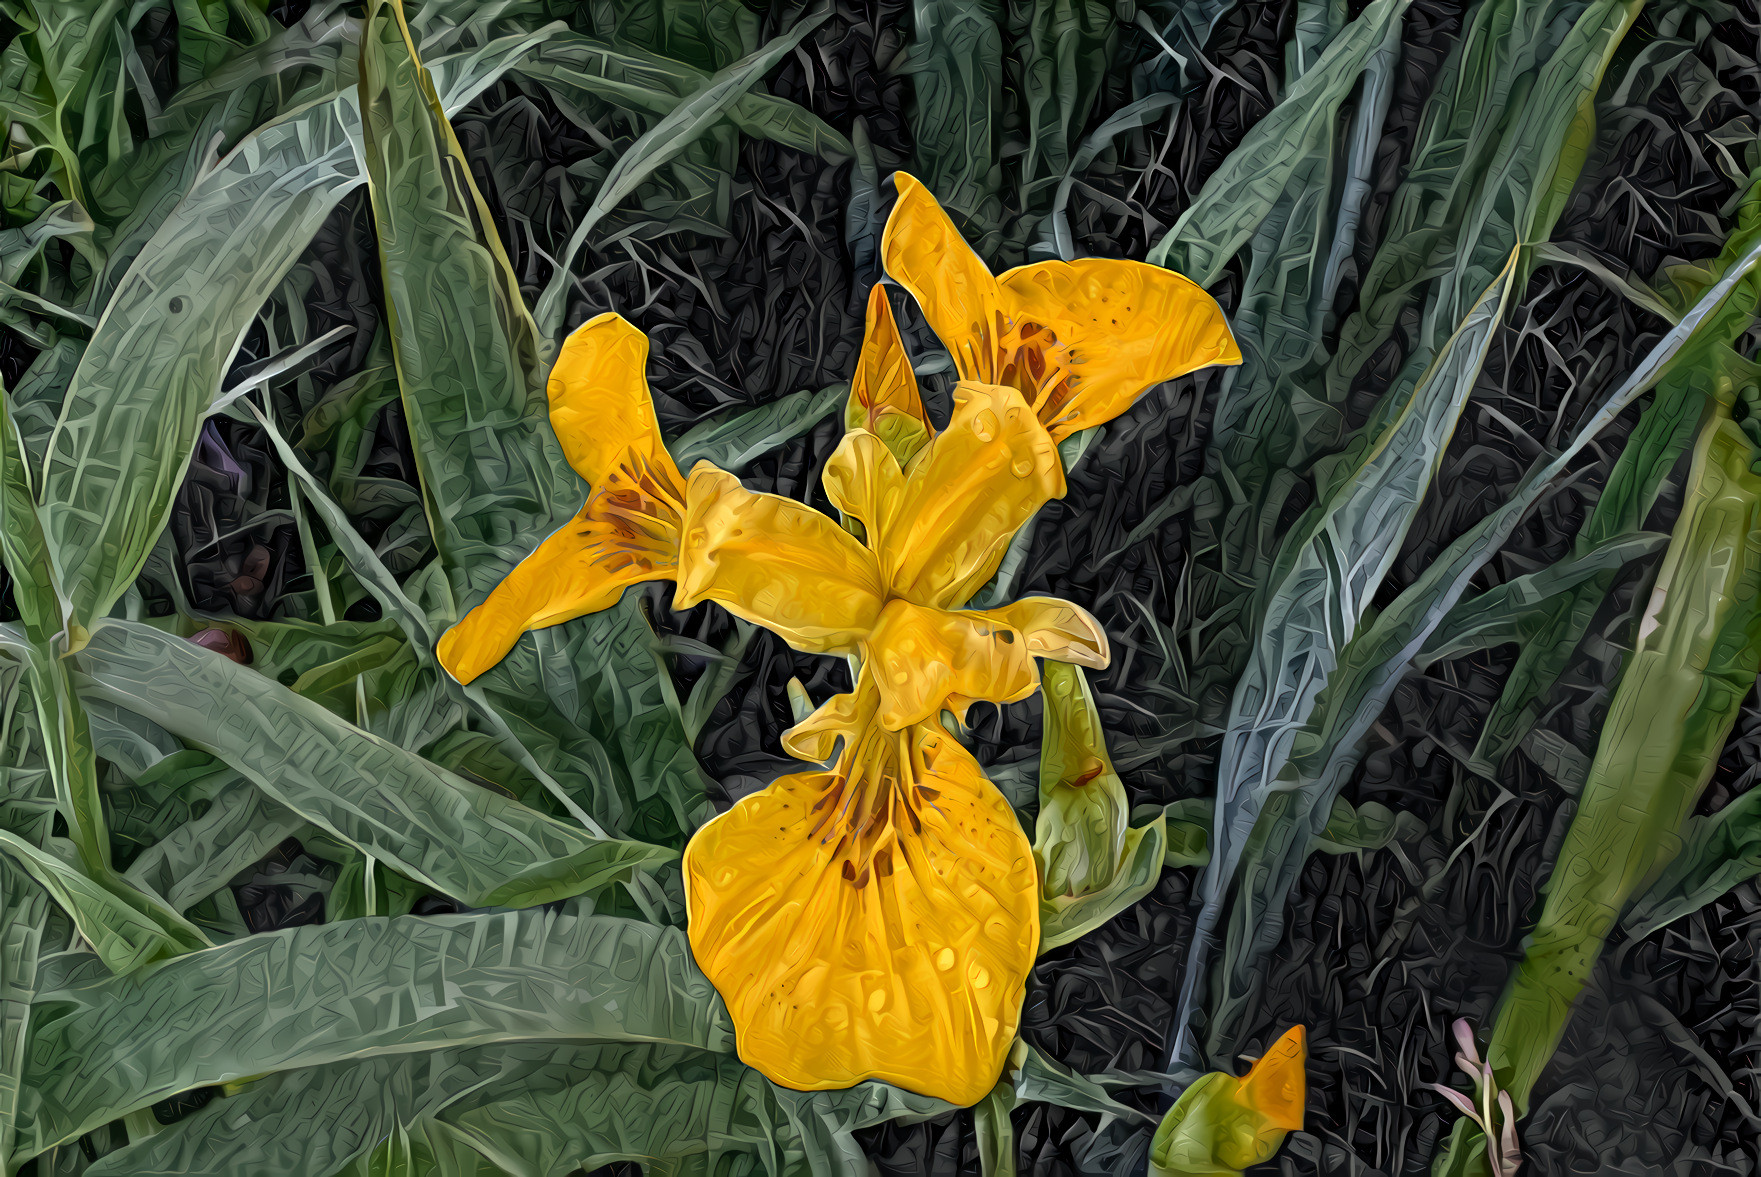 Wild Iris, Green Leaves